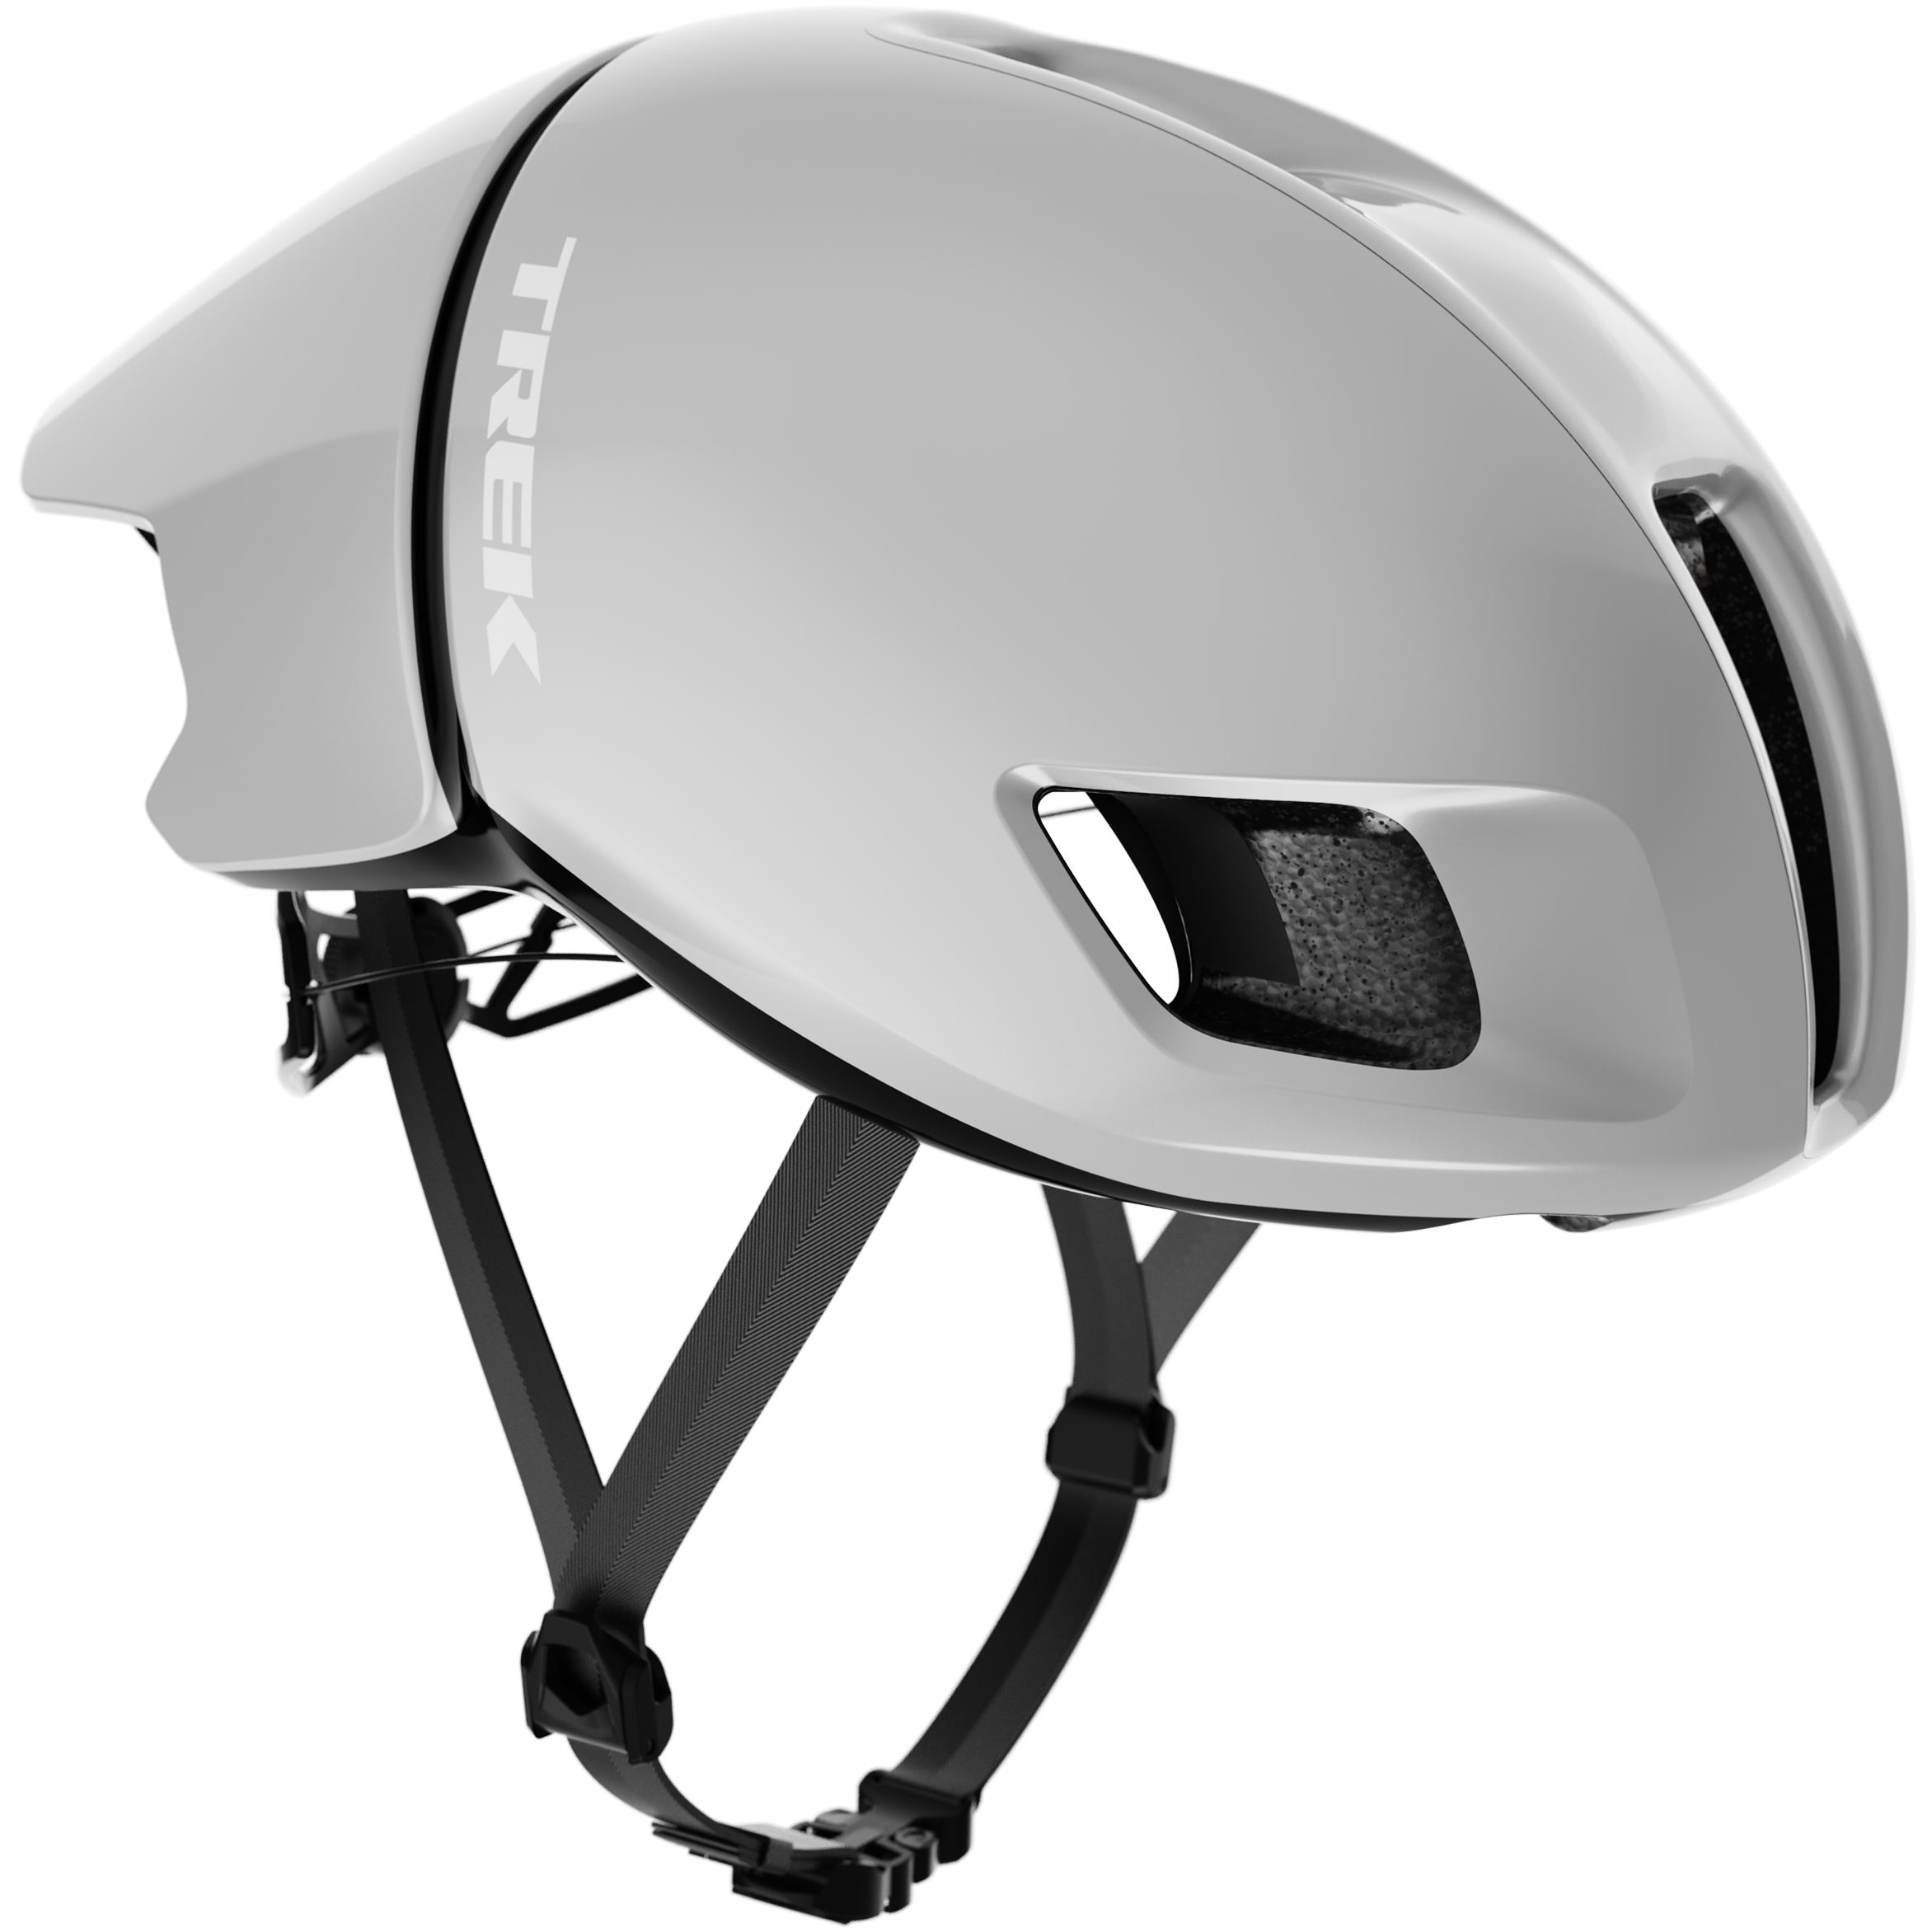 Cycles U.K. <b>Trek Ballista MIPS Road Bike Helmet</b> - Choice 3 Colours | an aerodynamic road bike helmet that is undeniably fast, yet surprisingly light, cool and comfortable.